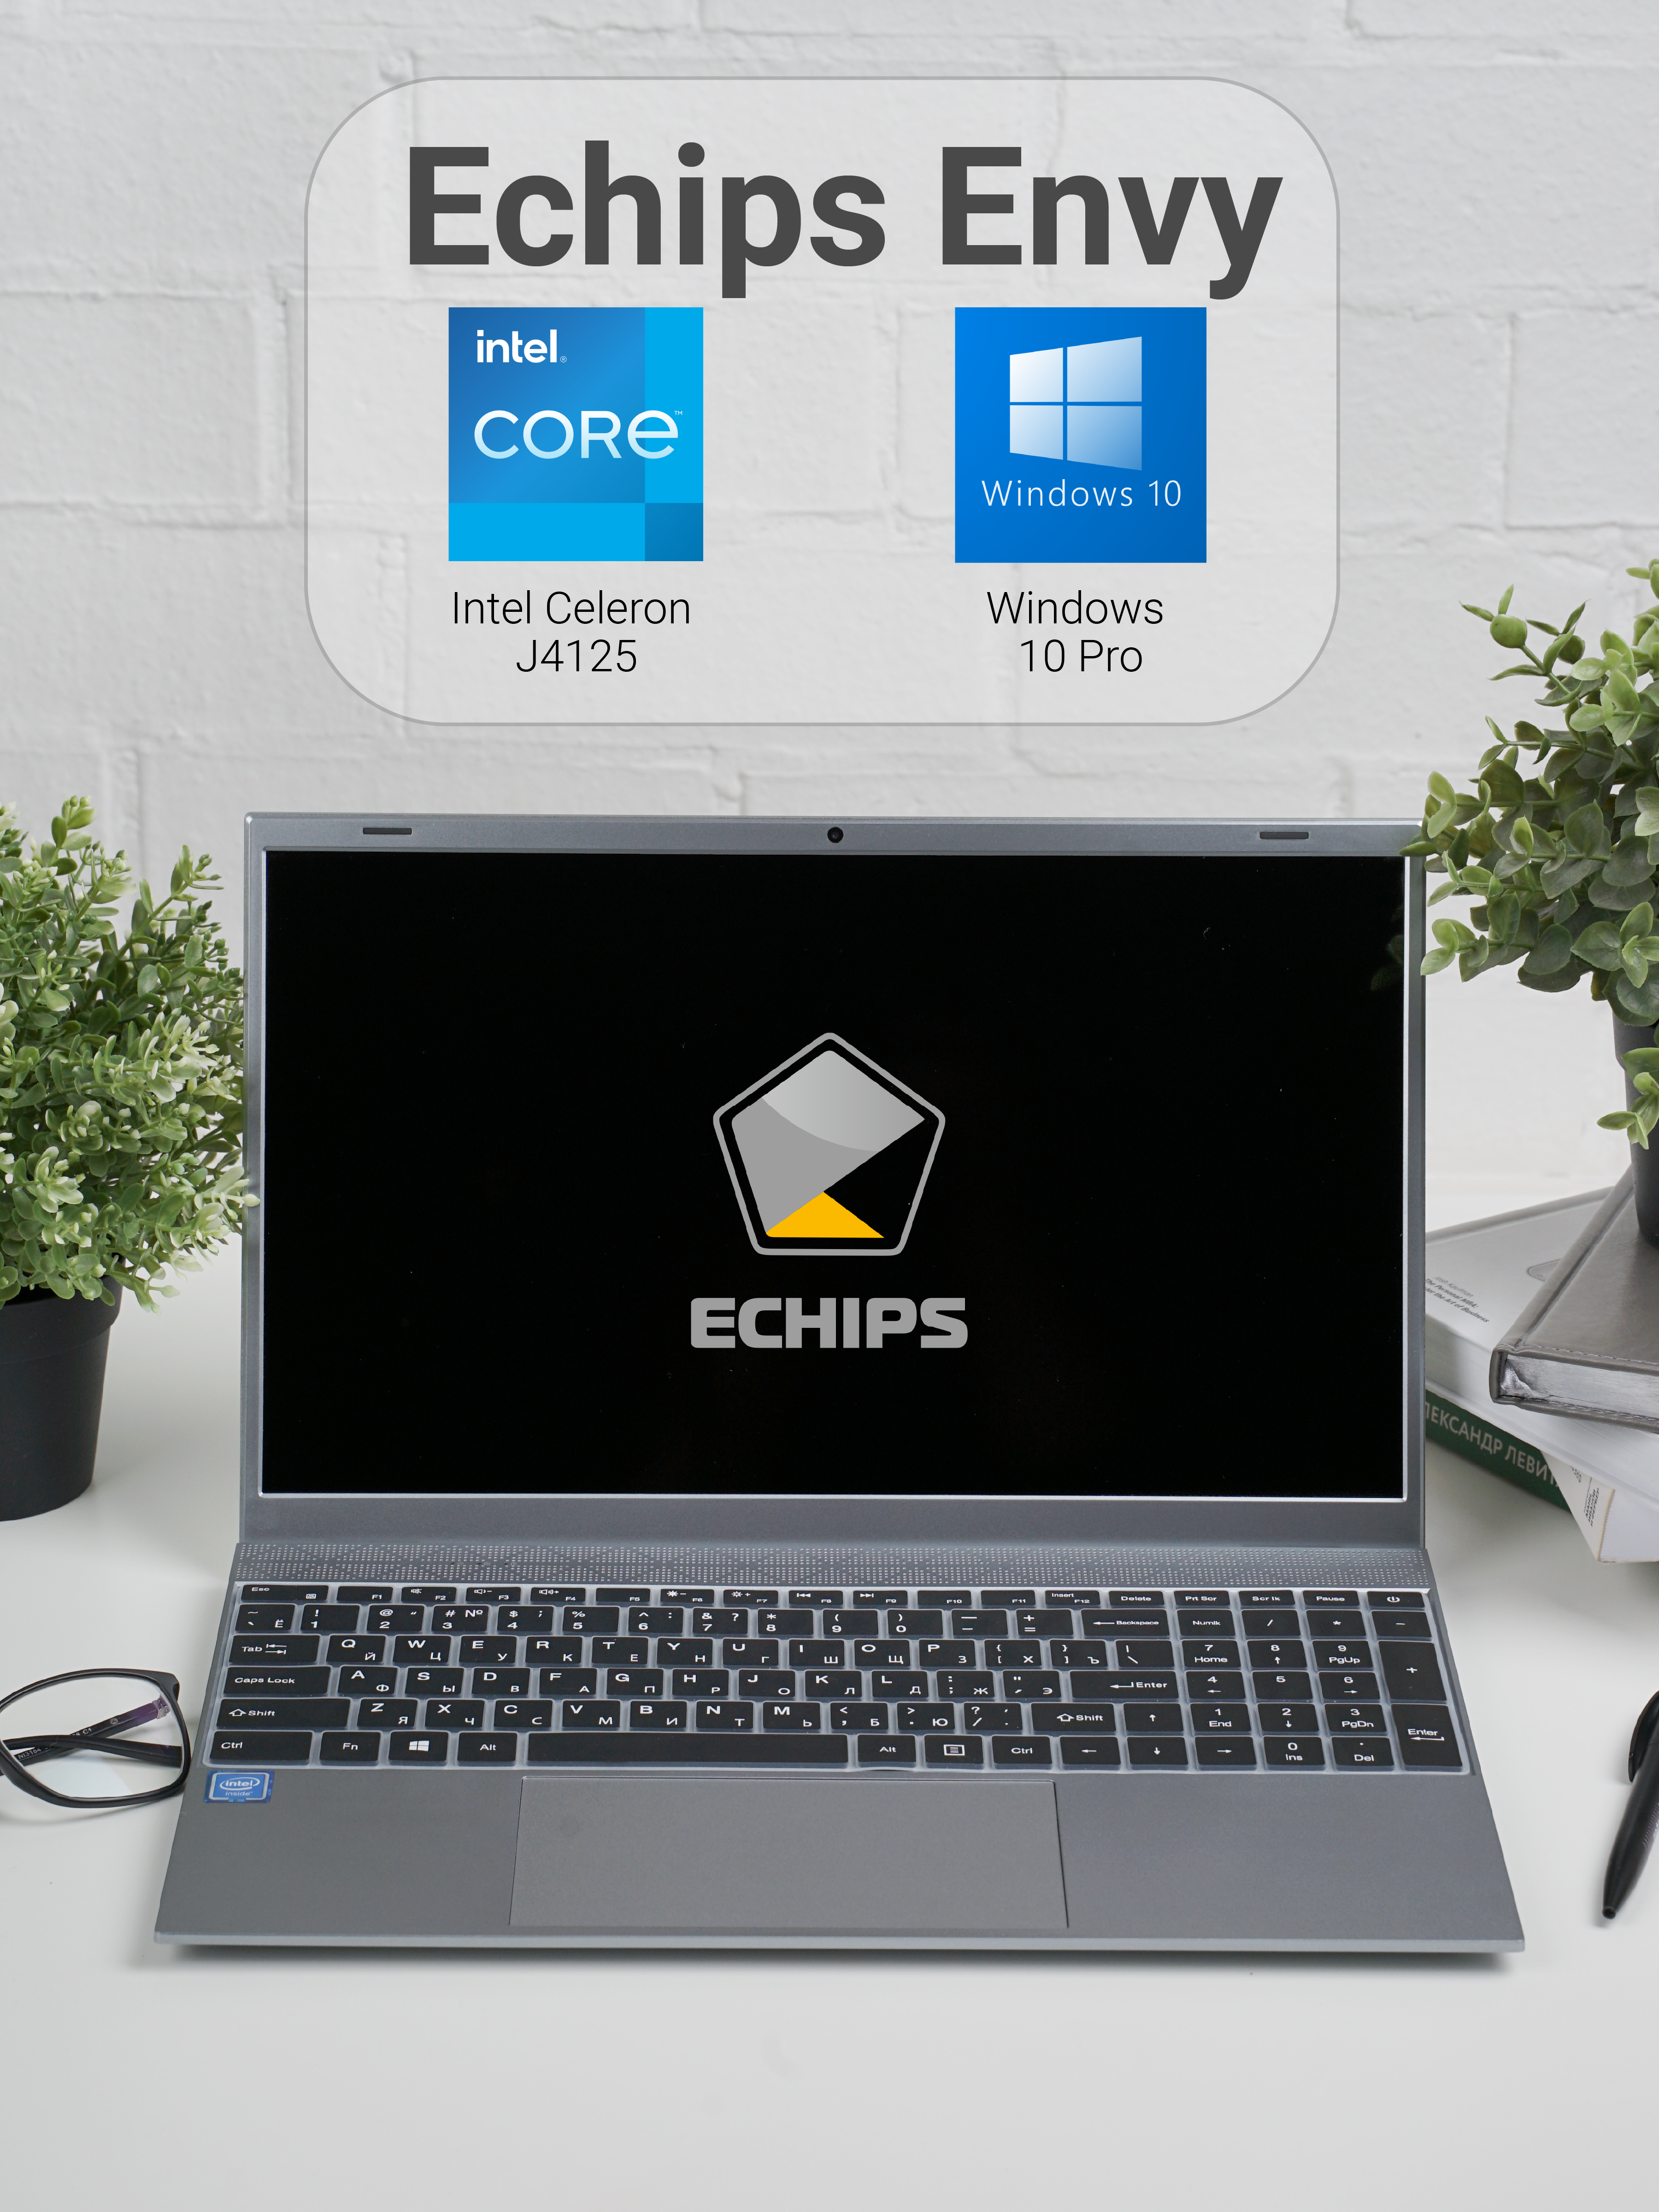 Ноутбук echips отзывы. Ноутбук echips Envy. Процессор: Intel Celeron j4125 (2.0 ГГЦ). Echips Envy 15.6. Echips j4125.